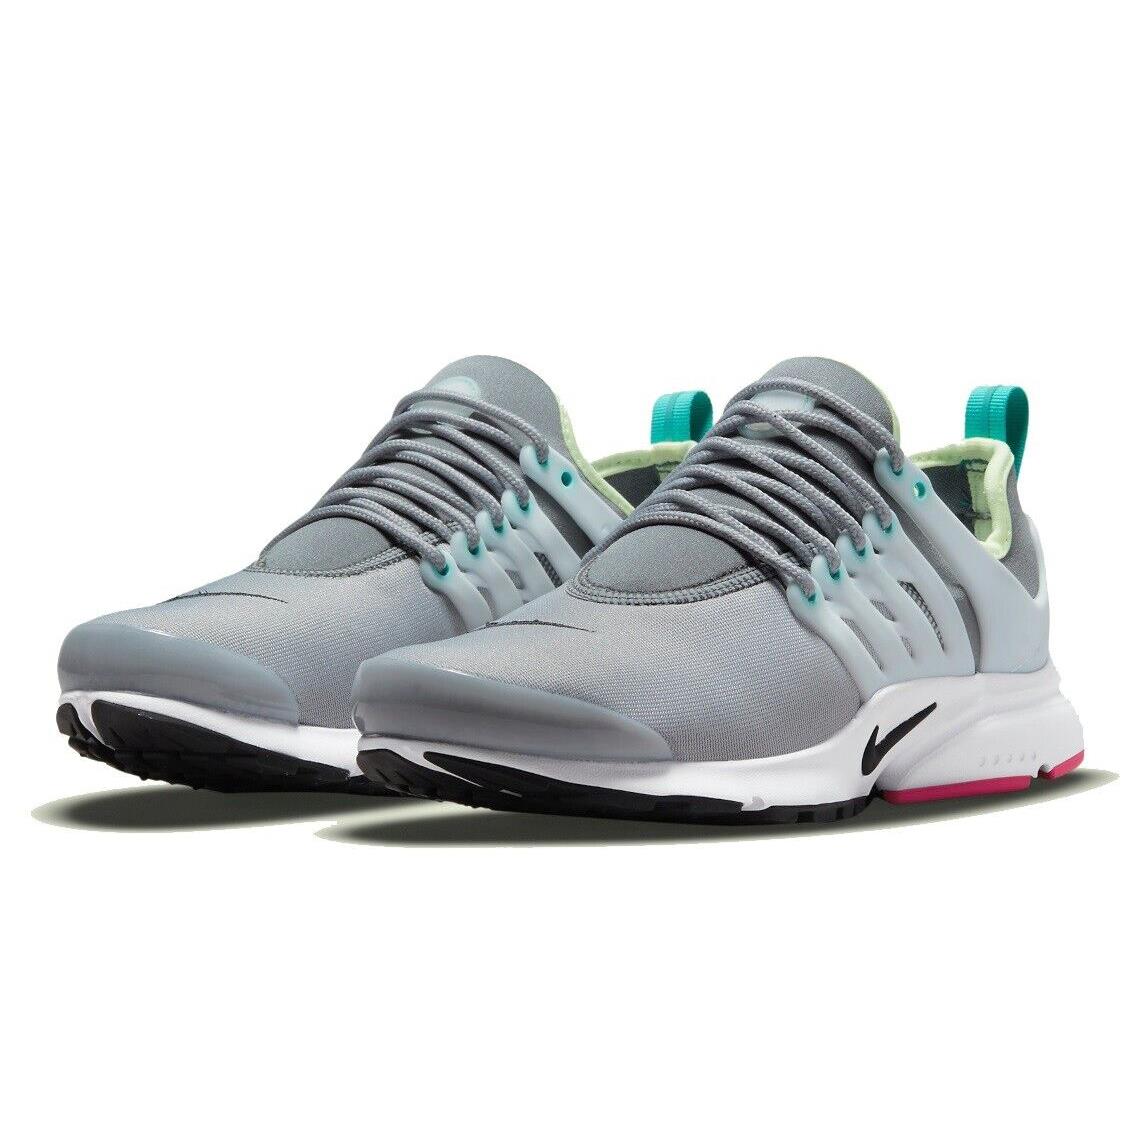 Nike Air Presto Womens Size 11 Sneaker Shoes 878068 018 Cool Grey - Gray